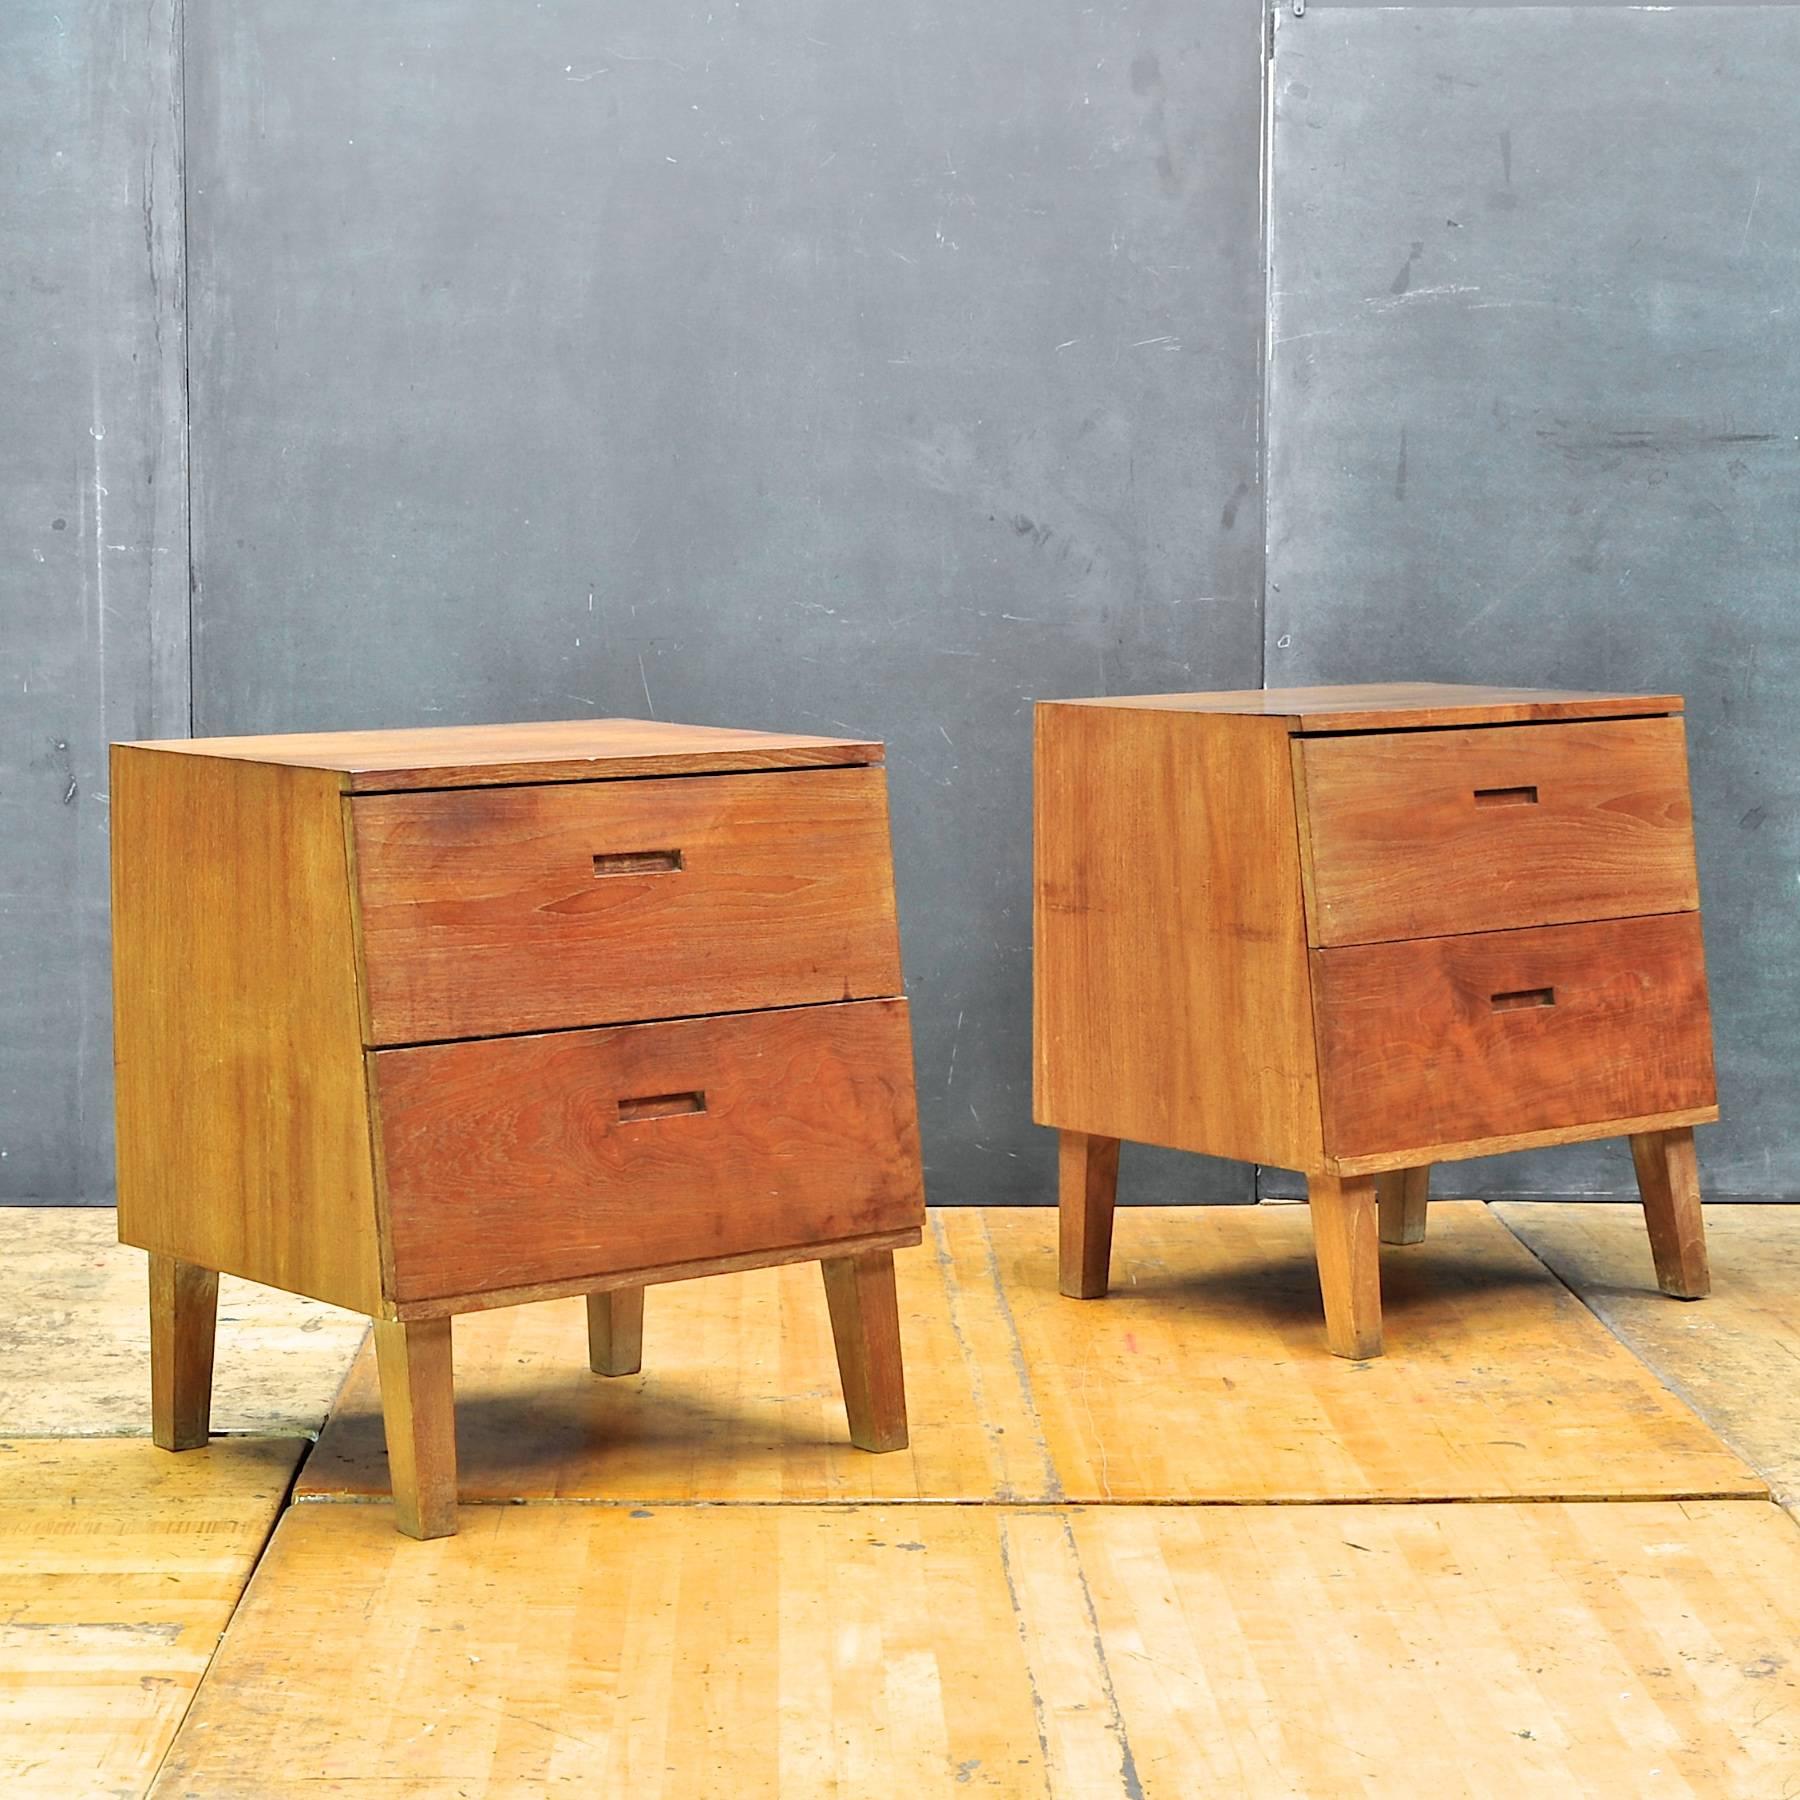 American Craftsman 1950s American Studio Craft Rustic Nightstand Chest Drawer Cabinets